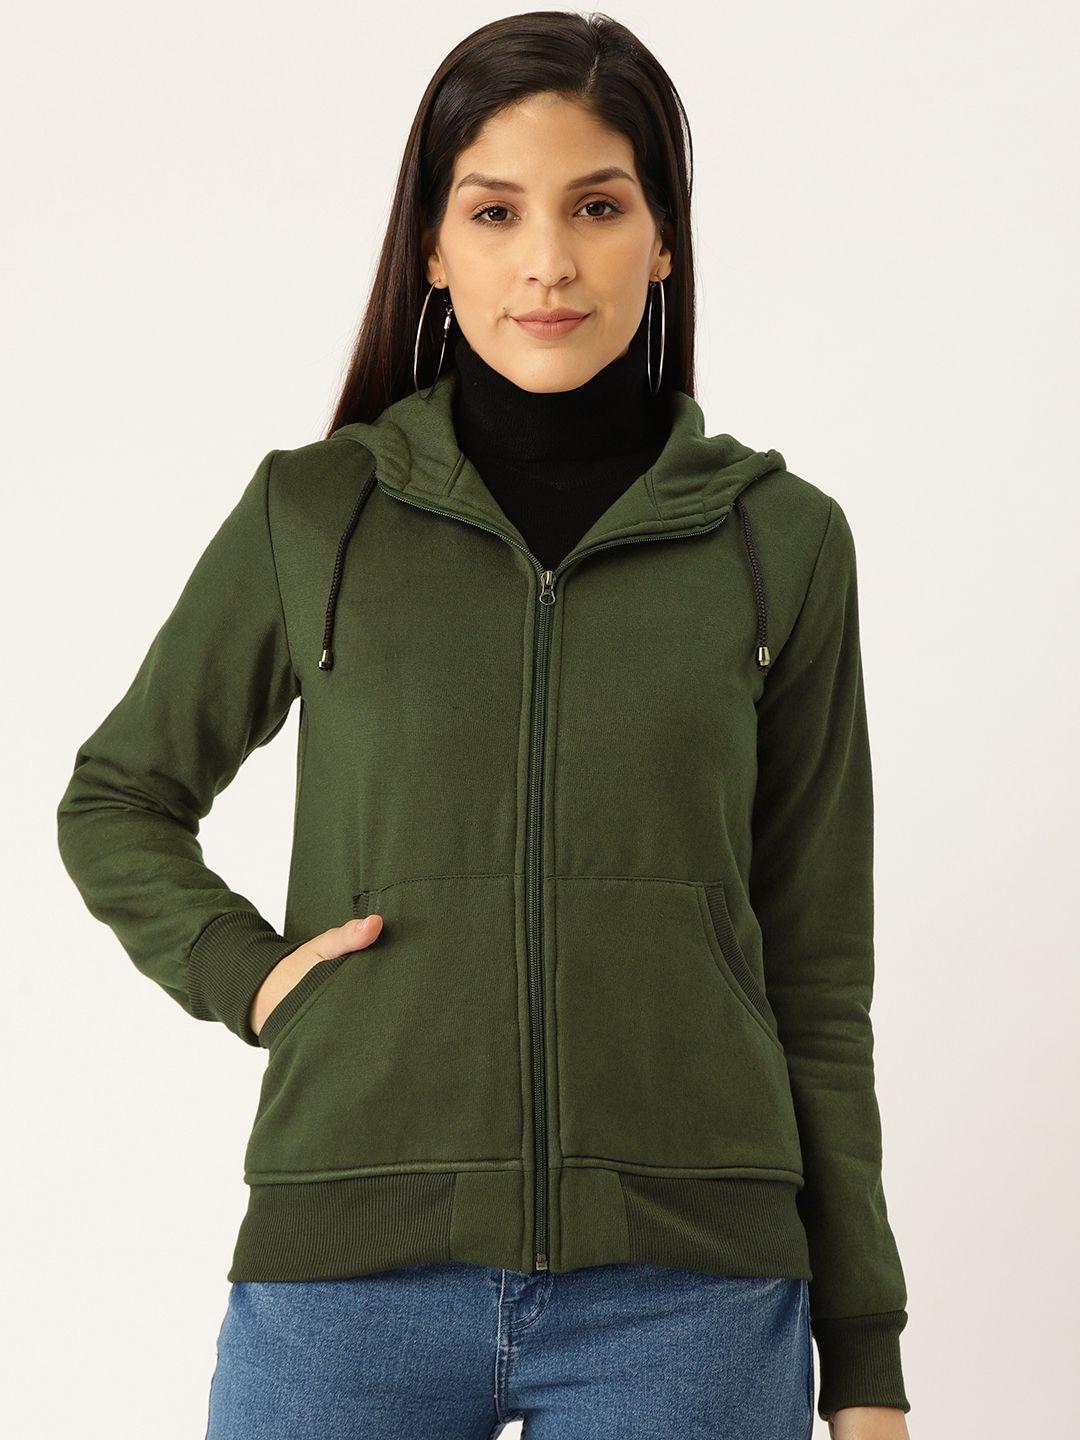 alsace lorraine paris women olive green solid hooded sweatshirt